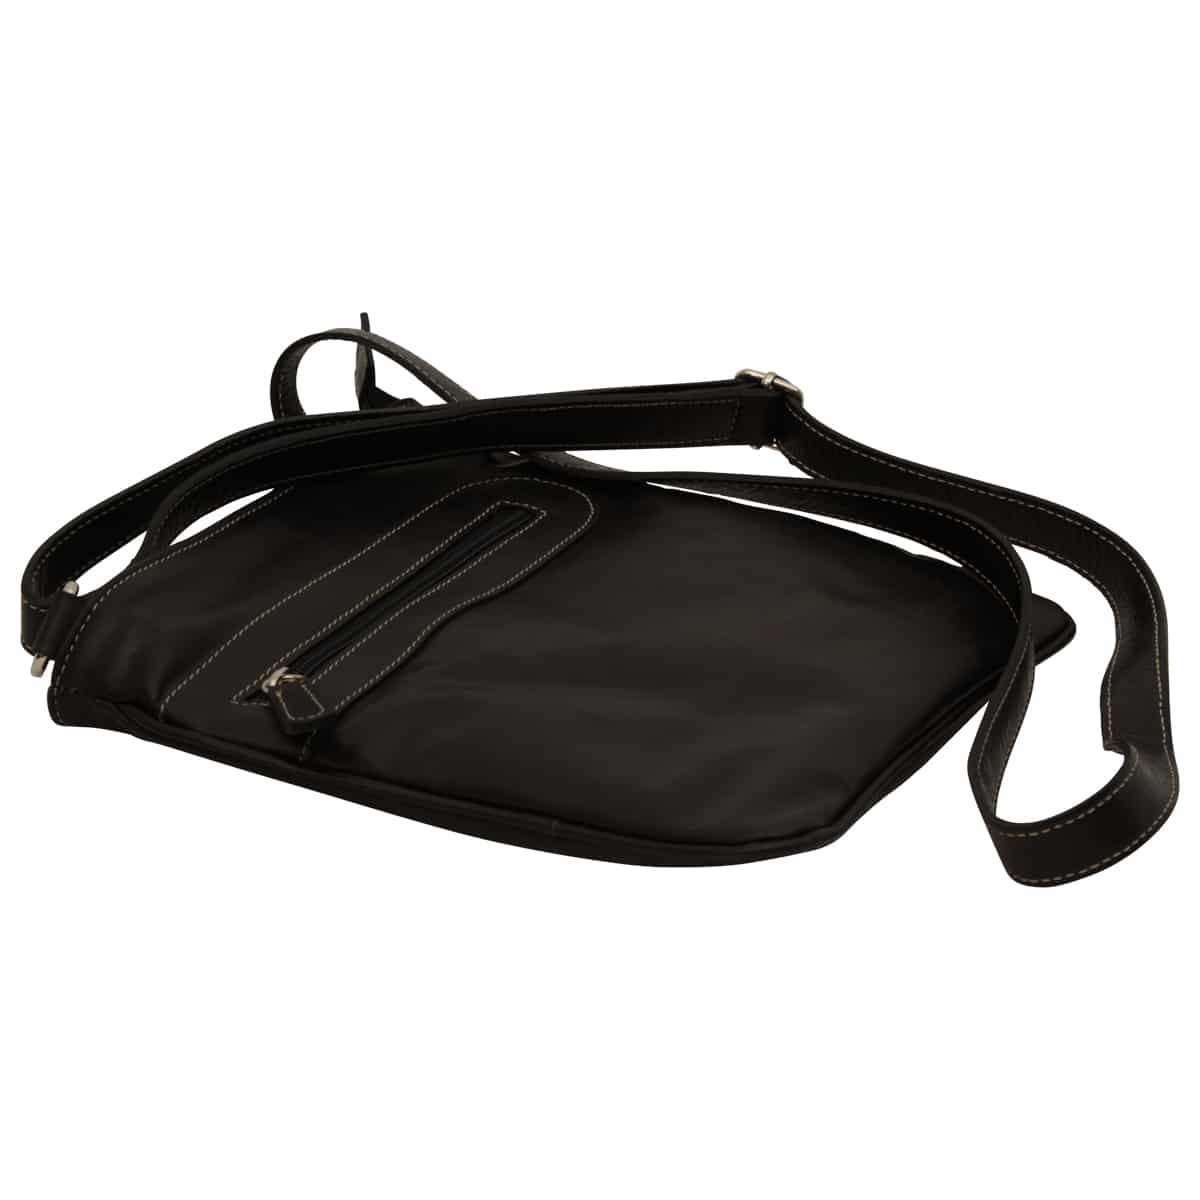 Leather cross body bag with zip pocket - Black | 086161NE | EURO | Old Angler Firenze